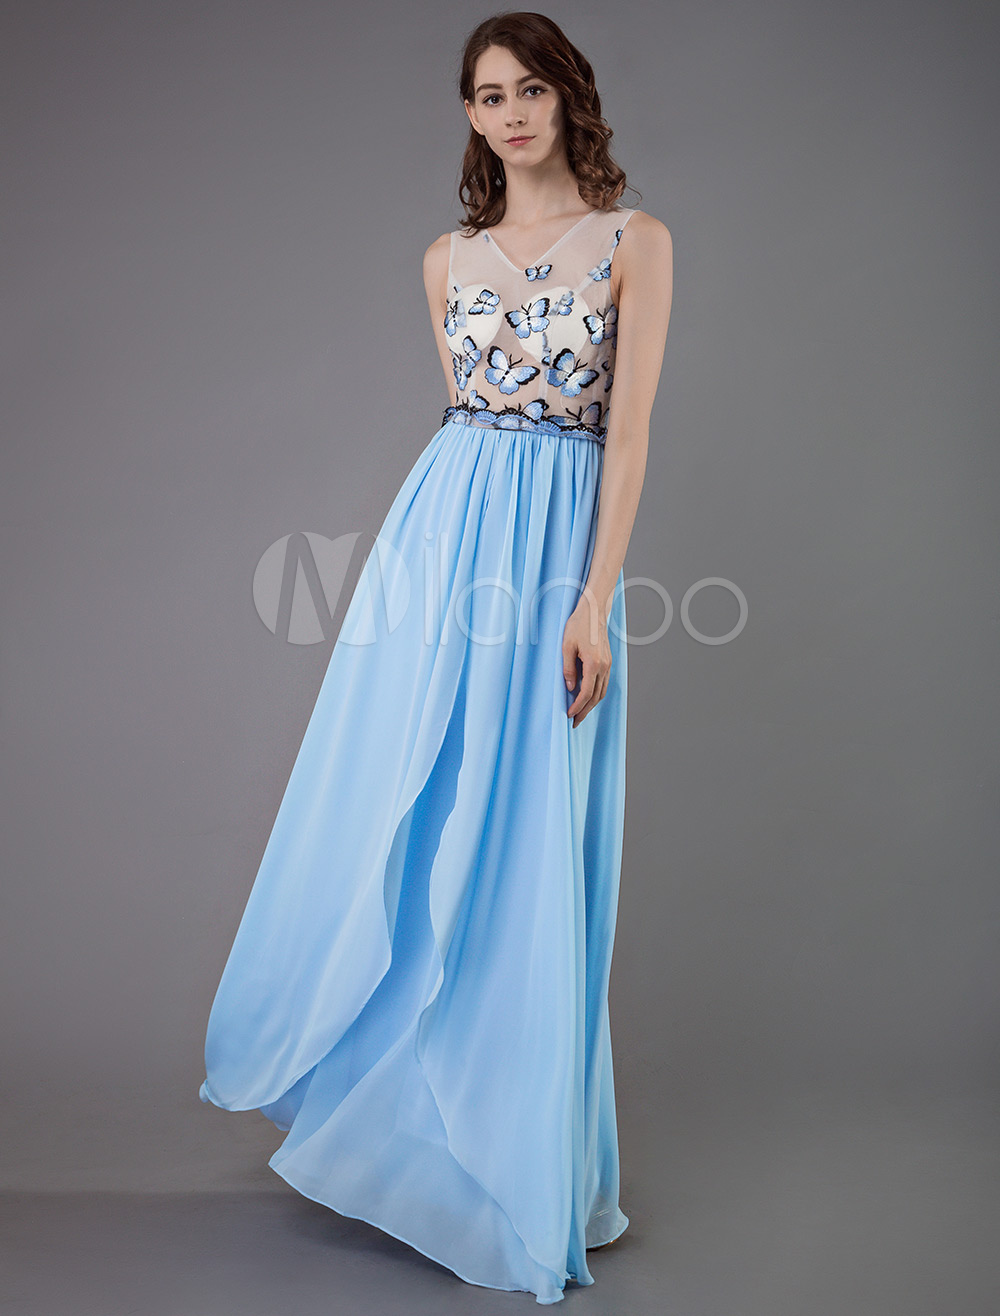 Baby Blue Prom Dress 2020 Chiffon A Line V-Neck Sleeveless Ruffles With